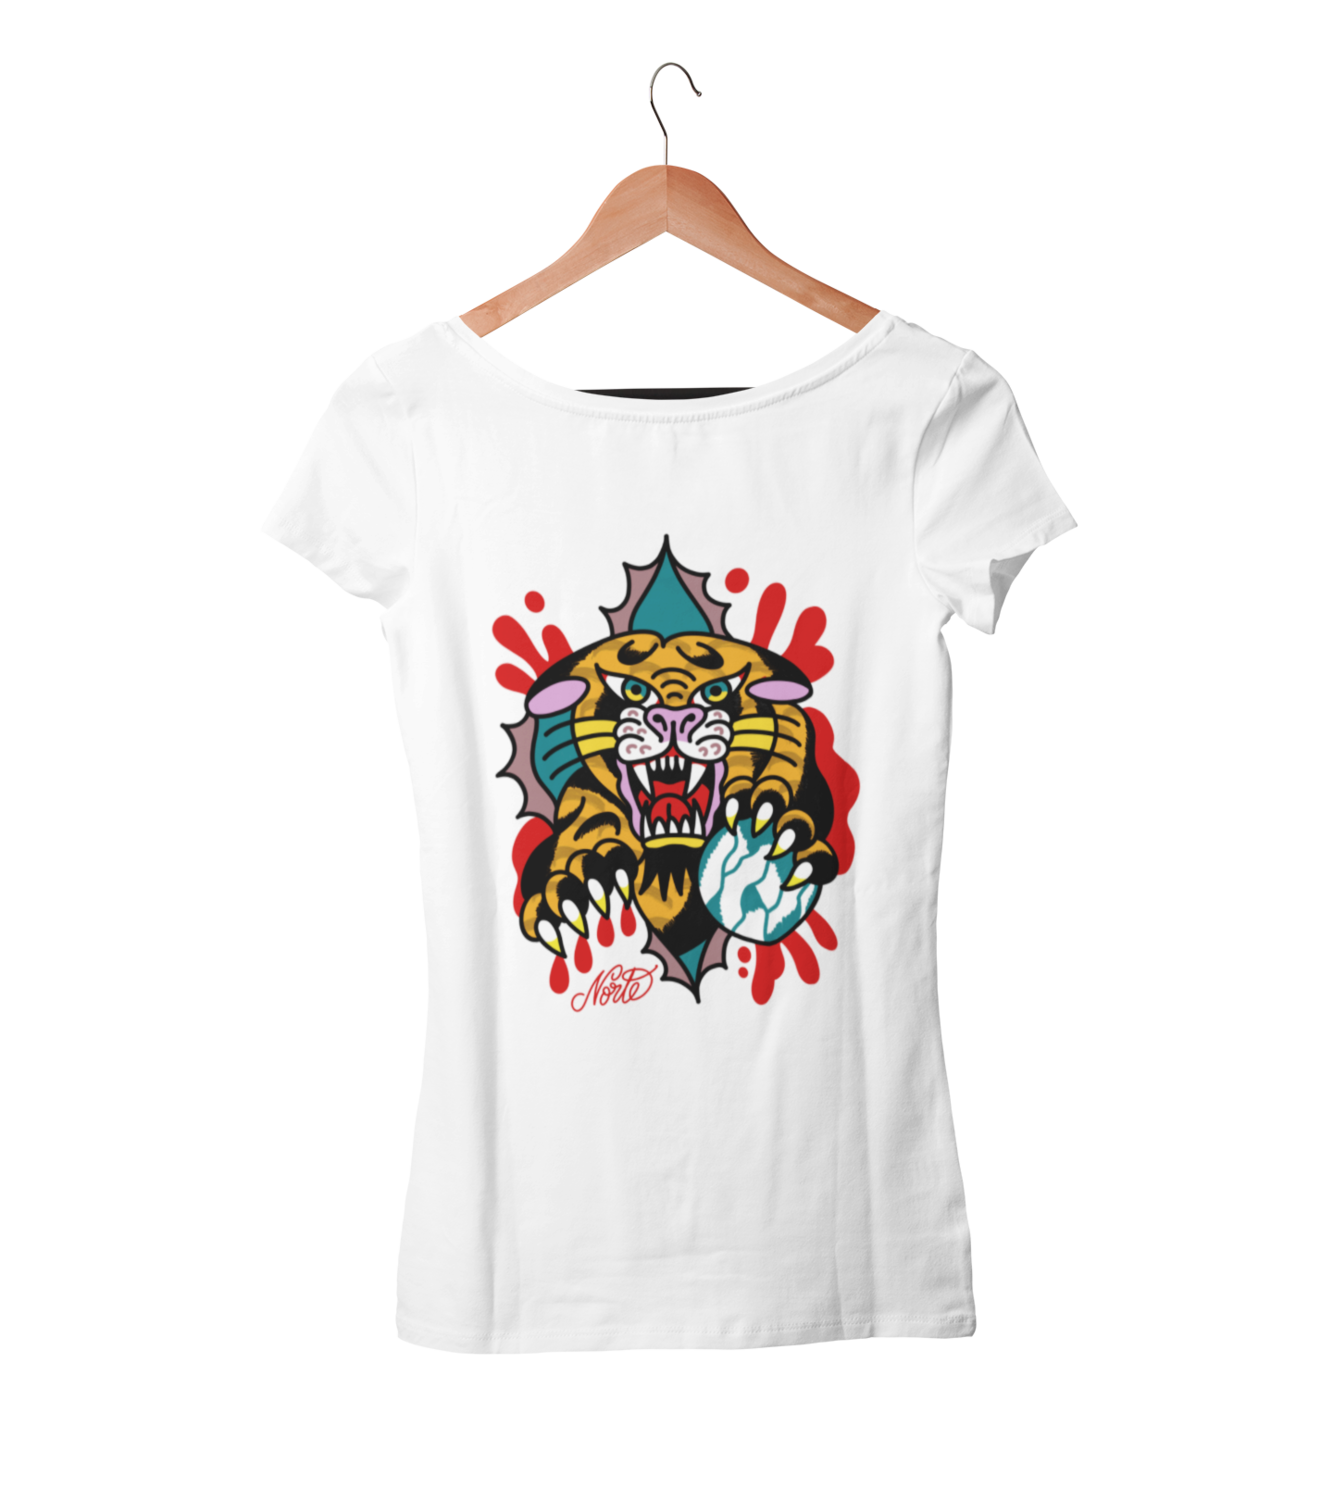 NORTEONE TATTOO "Tiger" tshirt for WOMEN